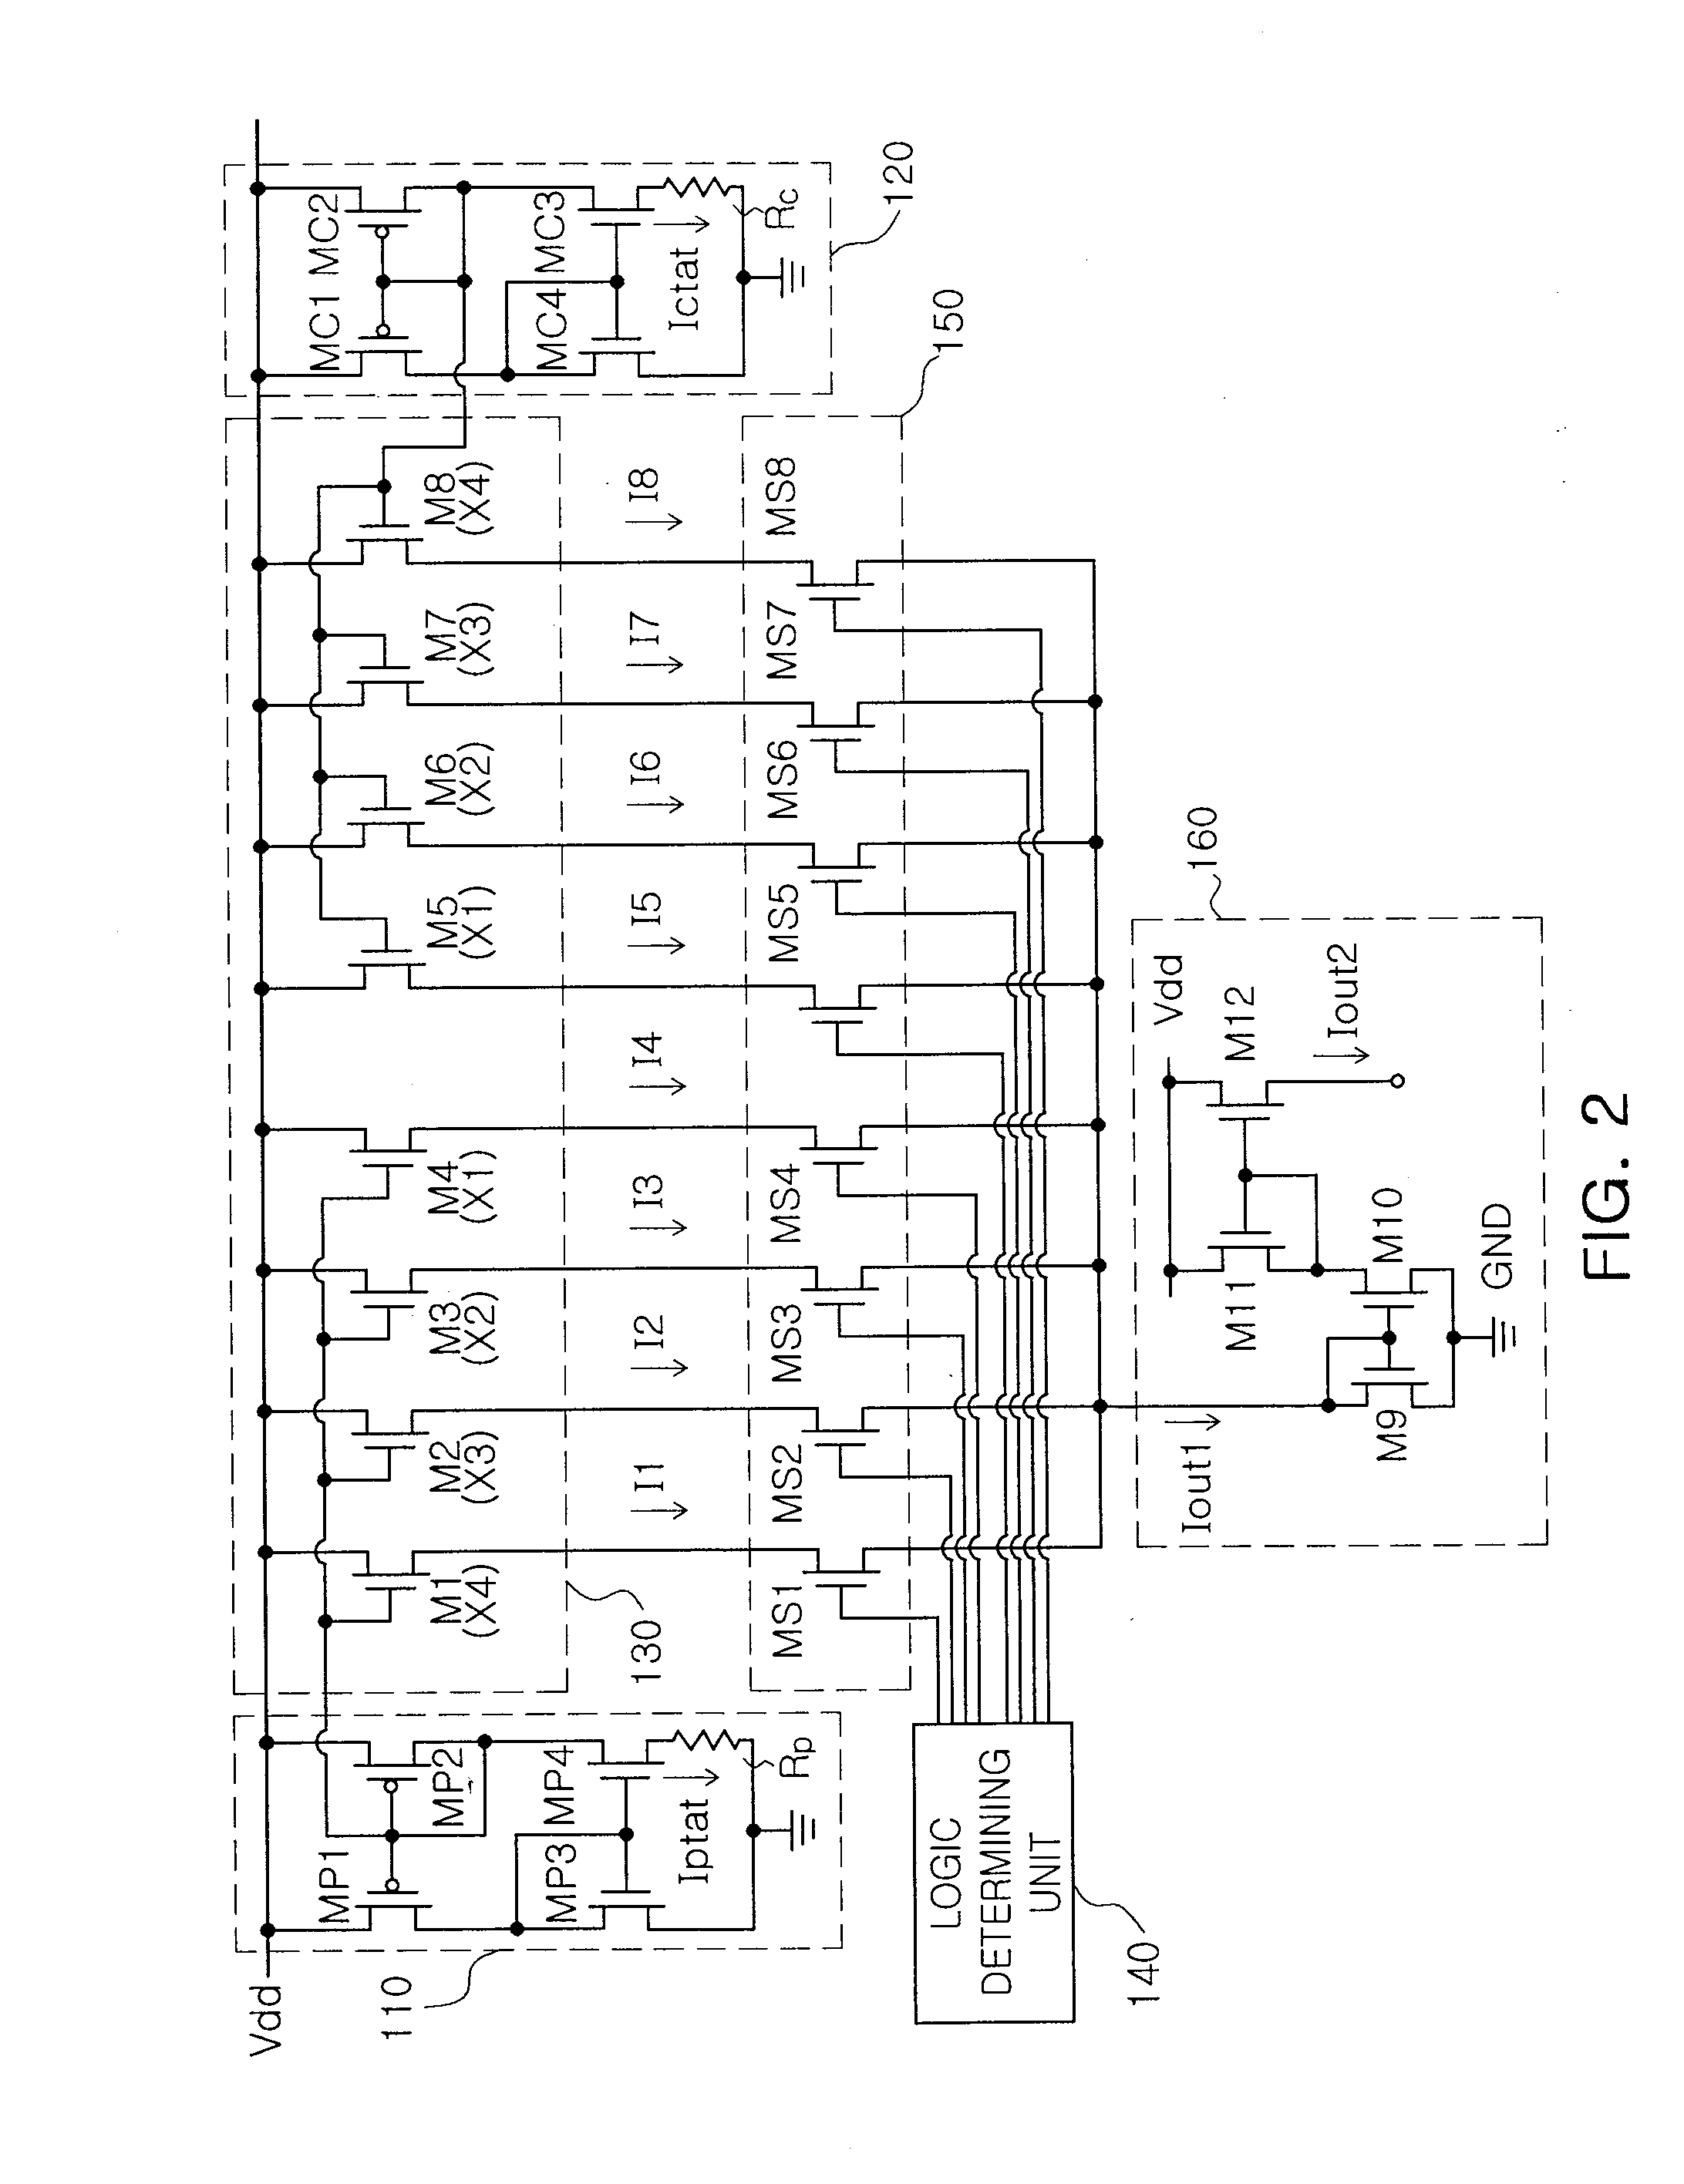 Current circuit having selective temperature coefficient